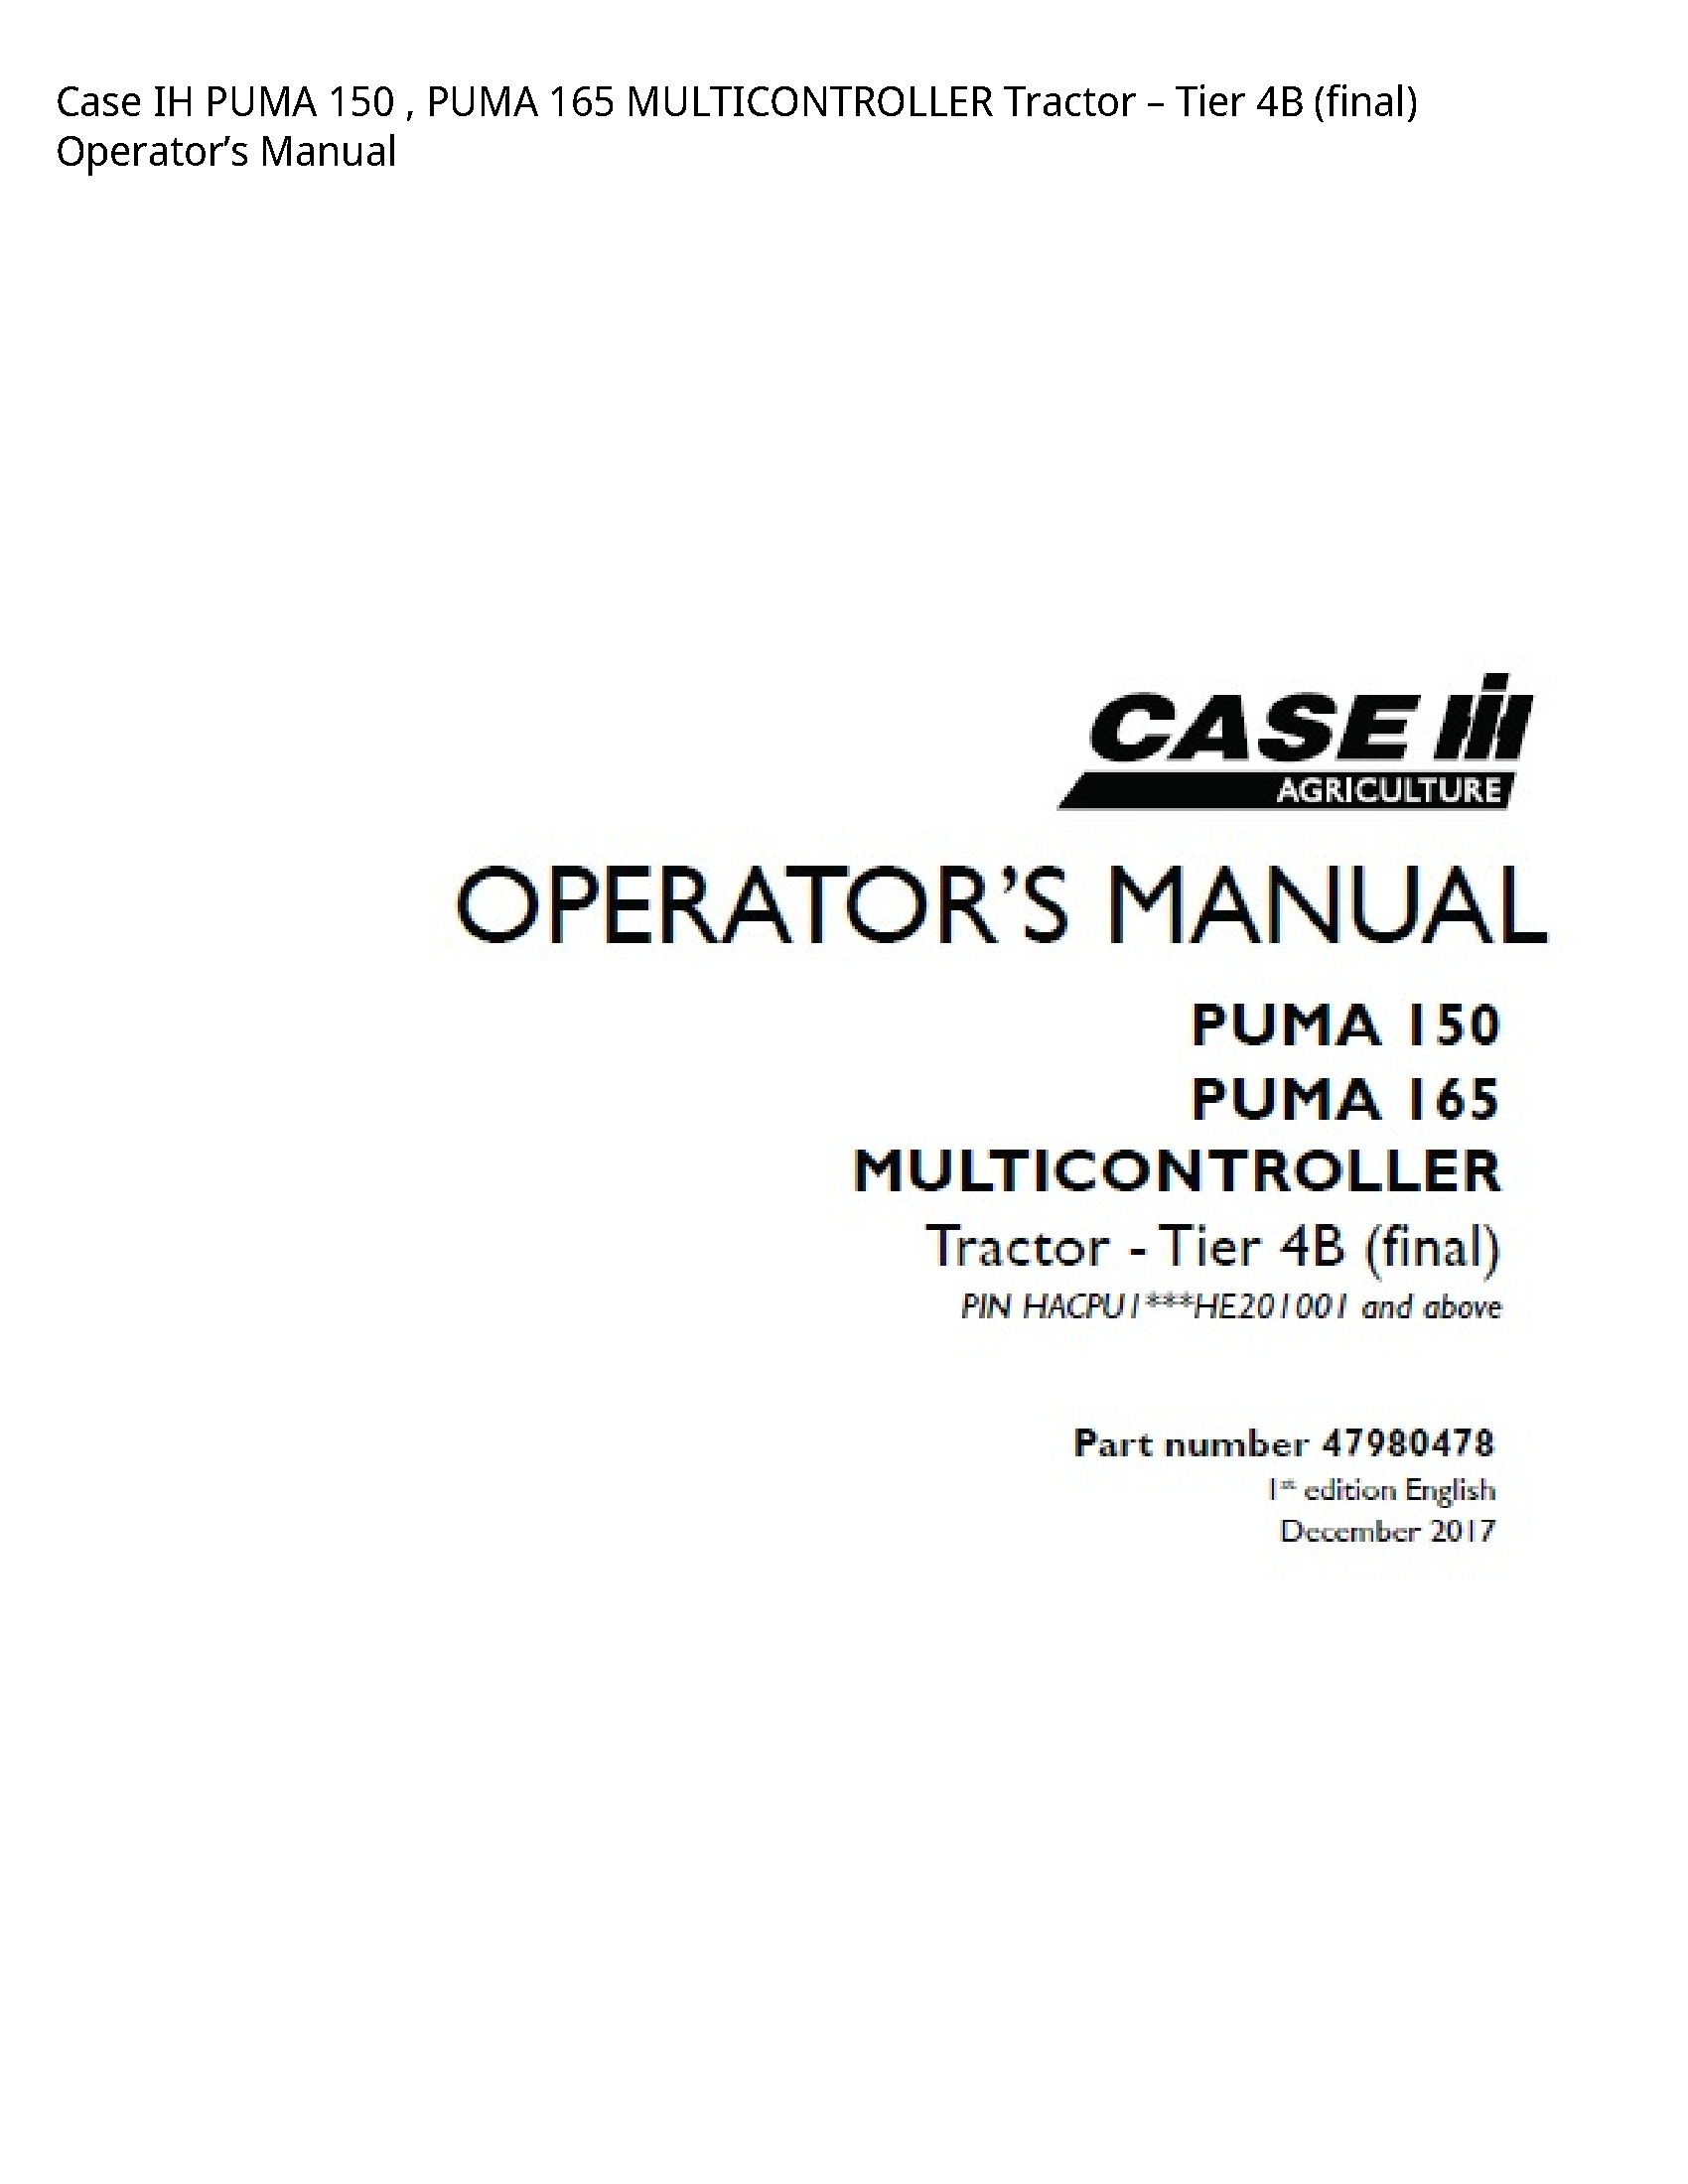 Case/Case IH 150 IH PUMA PUMA MULTICONTROLLER Tractor Tier (final) Operator’s manual